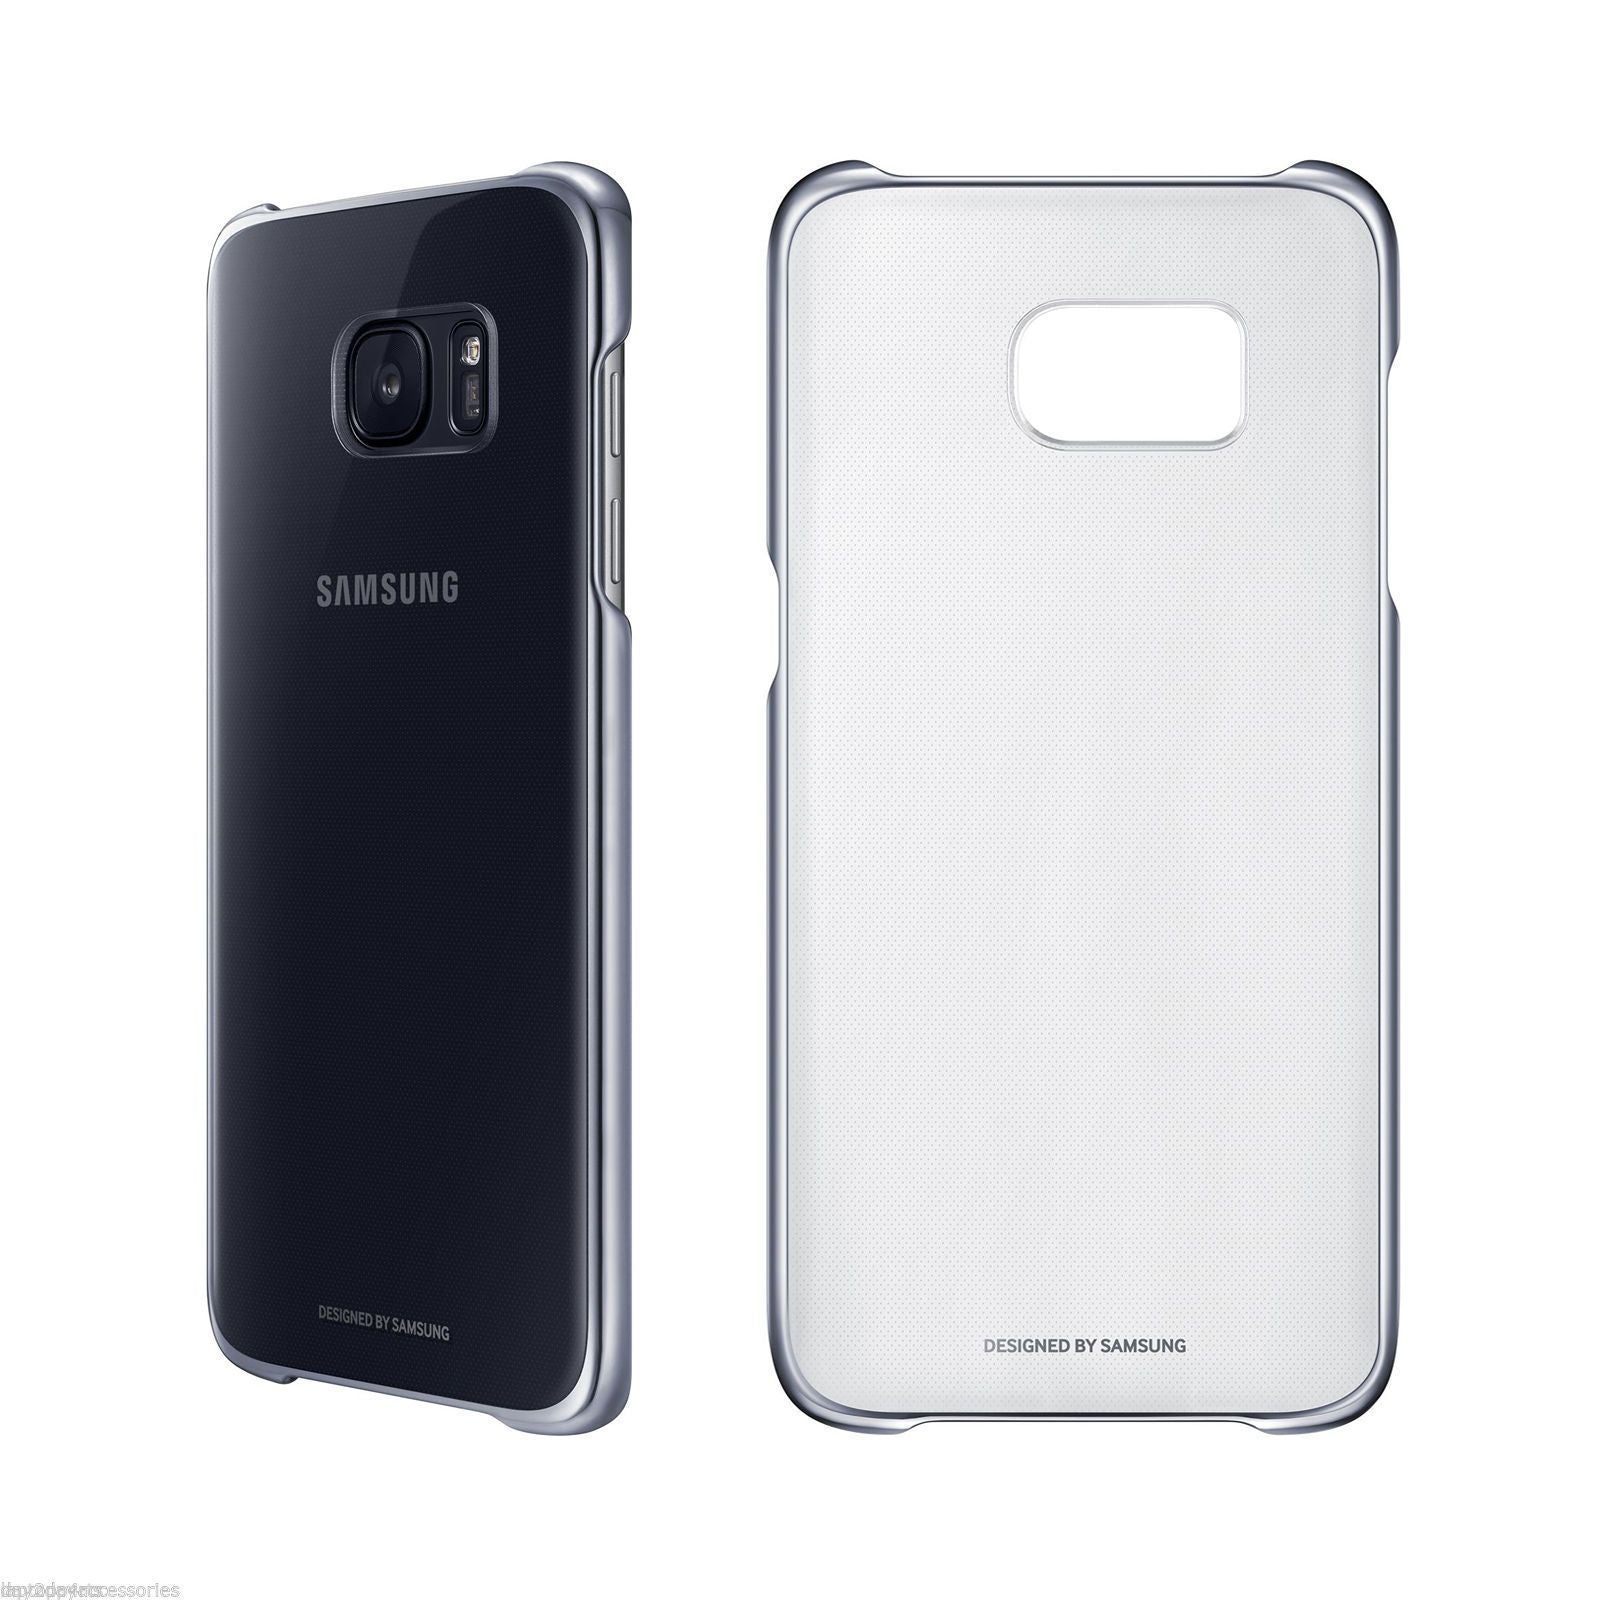 Kruik exotisch Noordoosten Samsung Case for Galaxy S7 Edge Back Protective Cover - Clear & Silver -  ENV Outlet